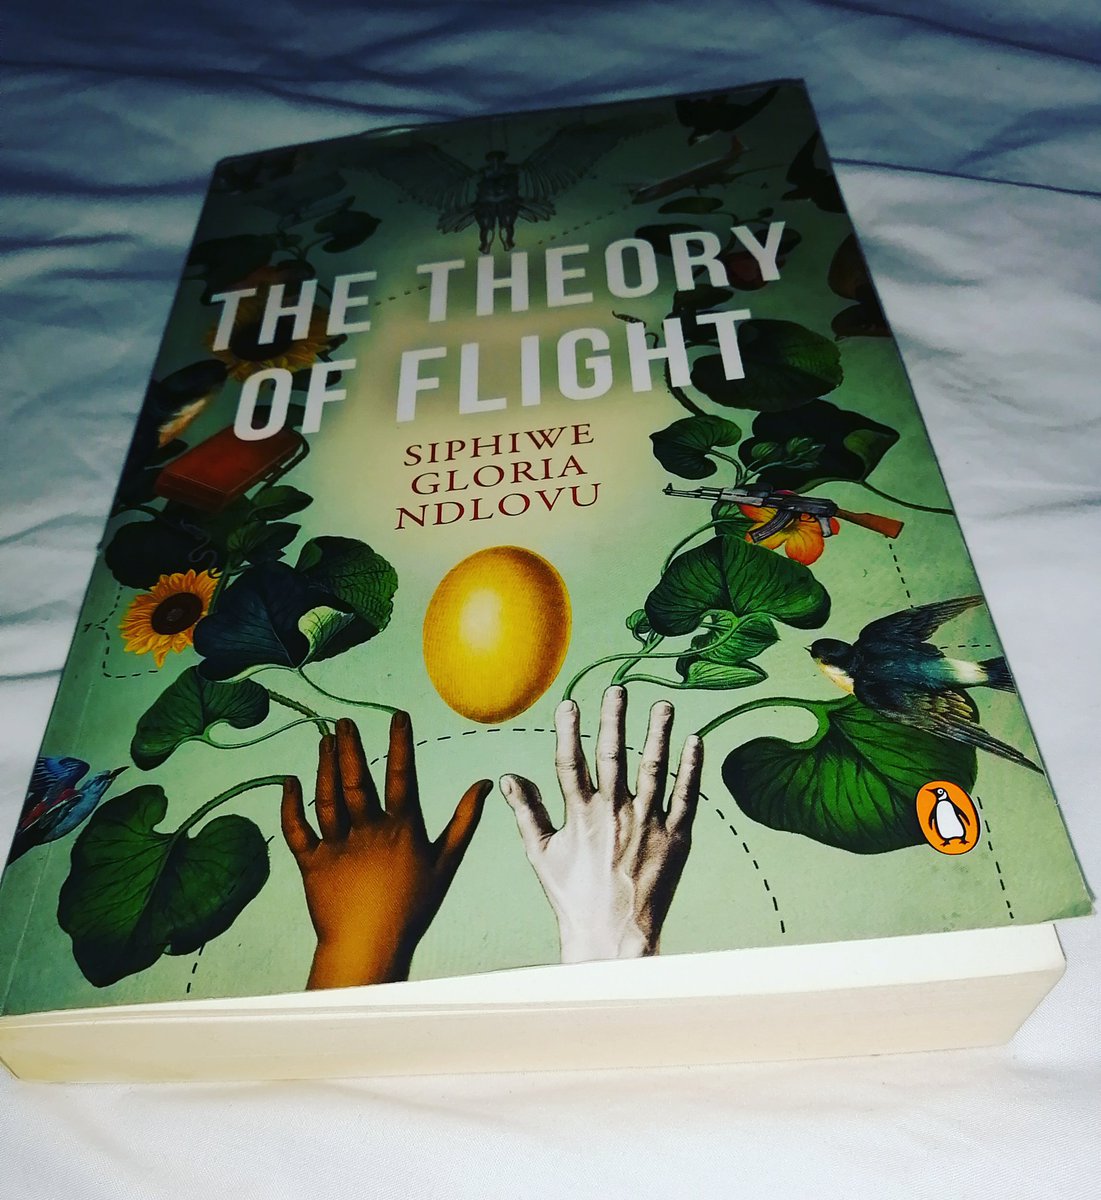 Now reading The Theory of Flight by Siphiwe Gloria Ndlovu.  @JeleCynthia said it is good.